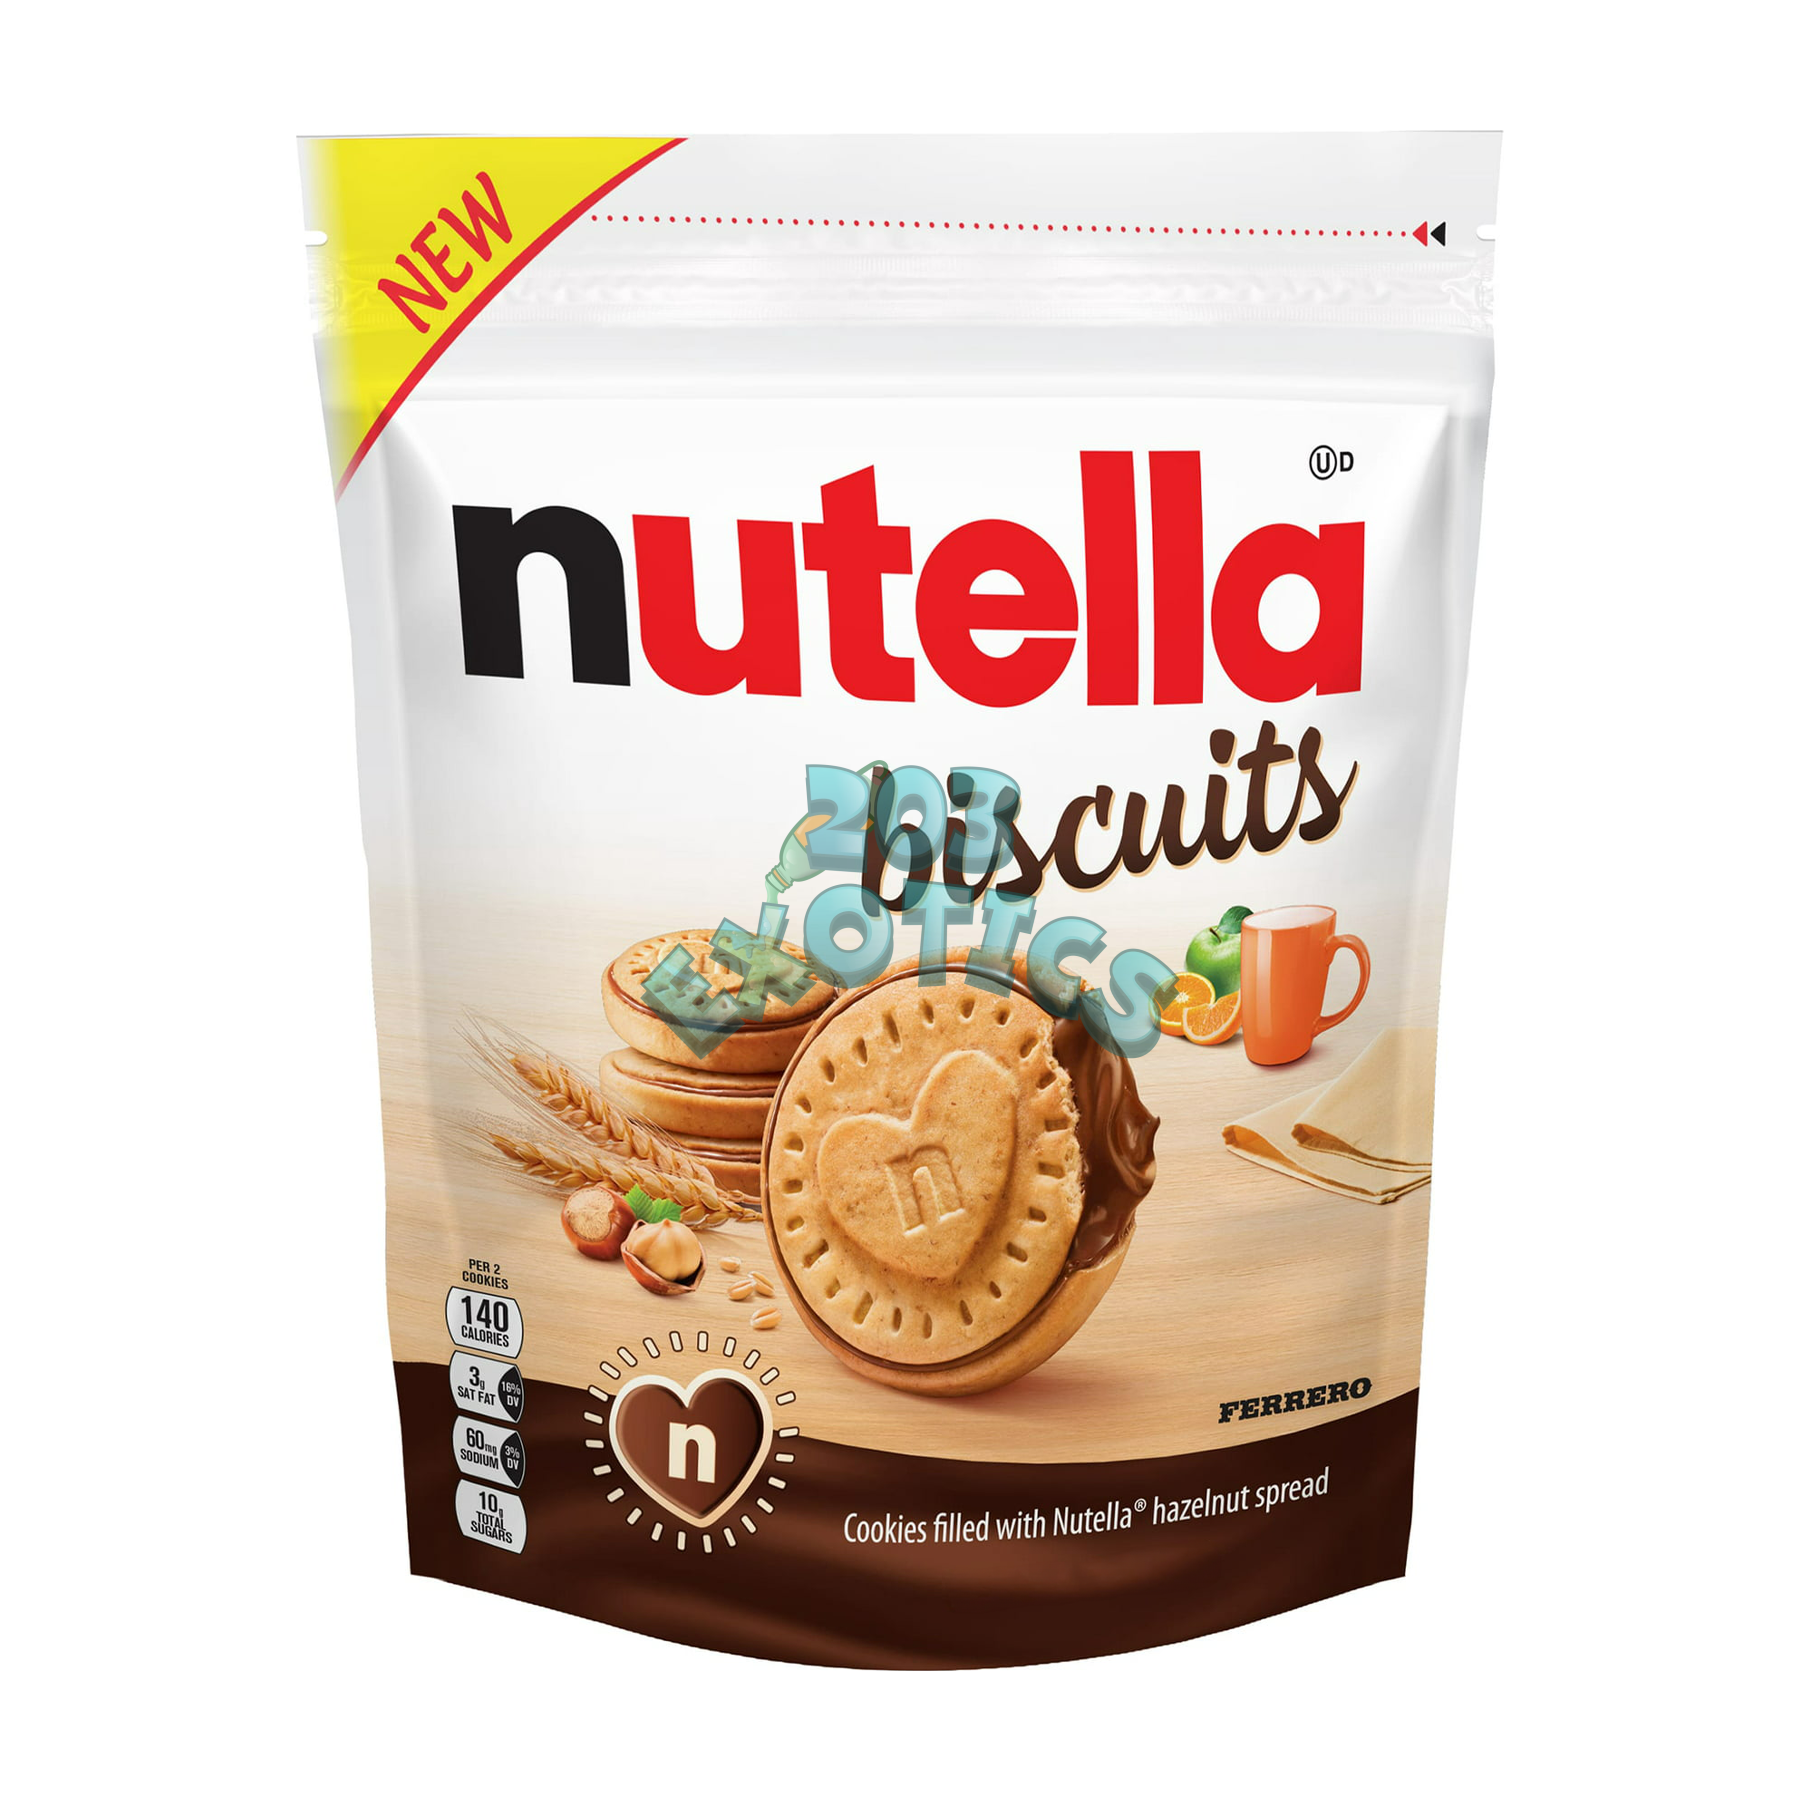 Nutella Biscuits (304G) Cookie